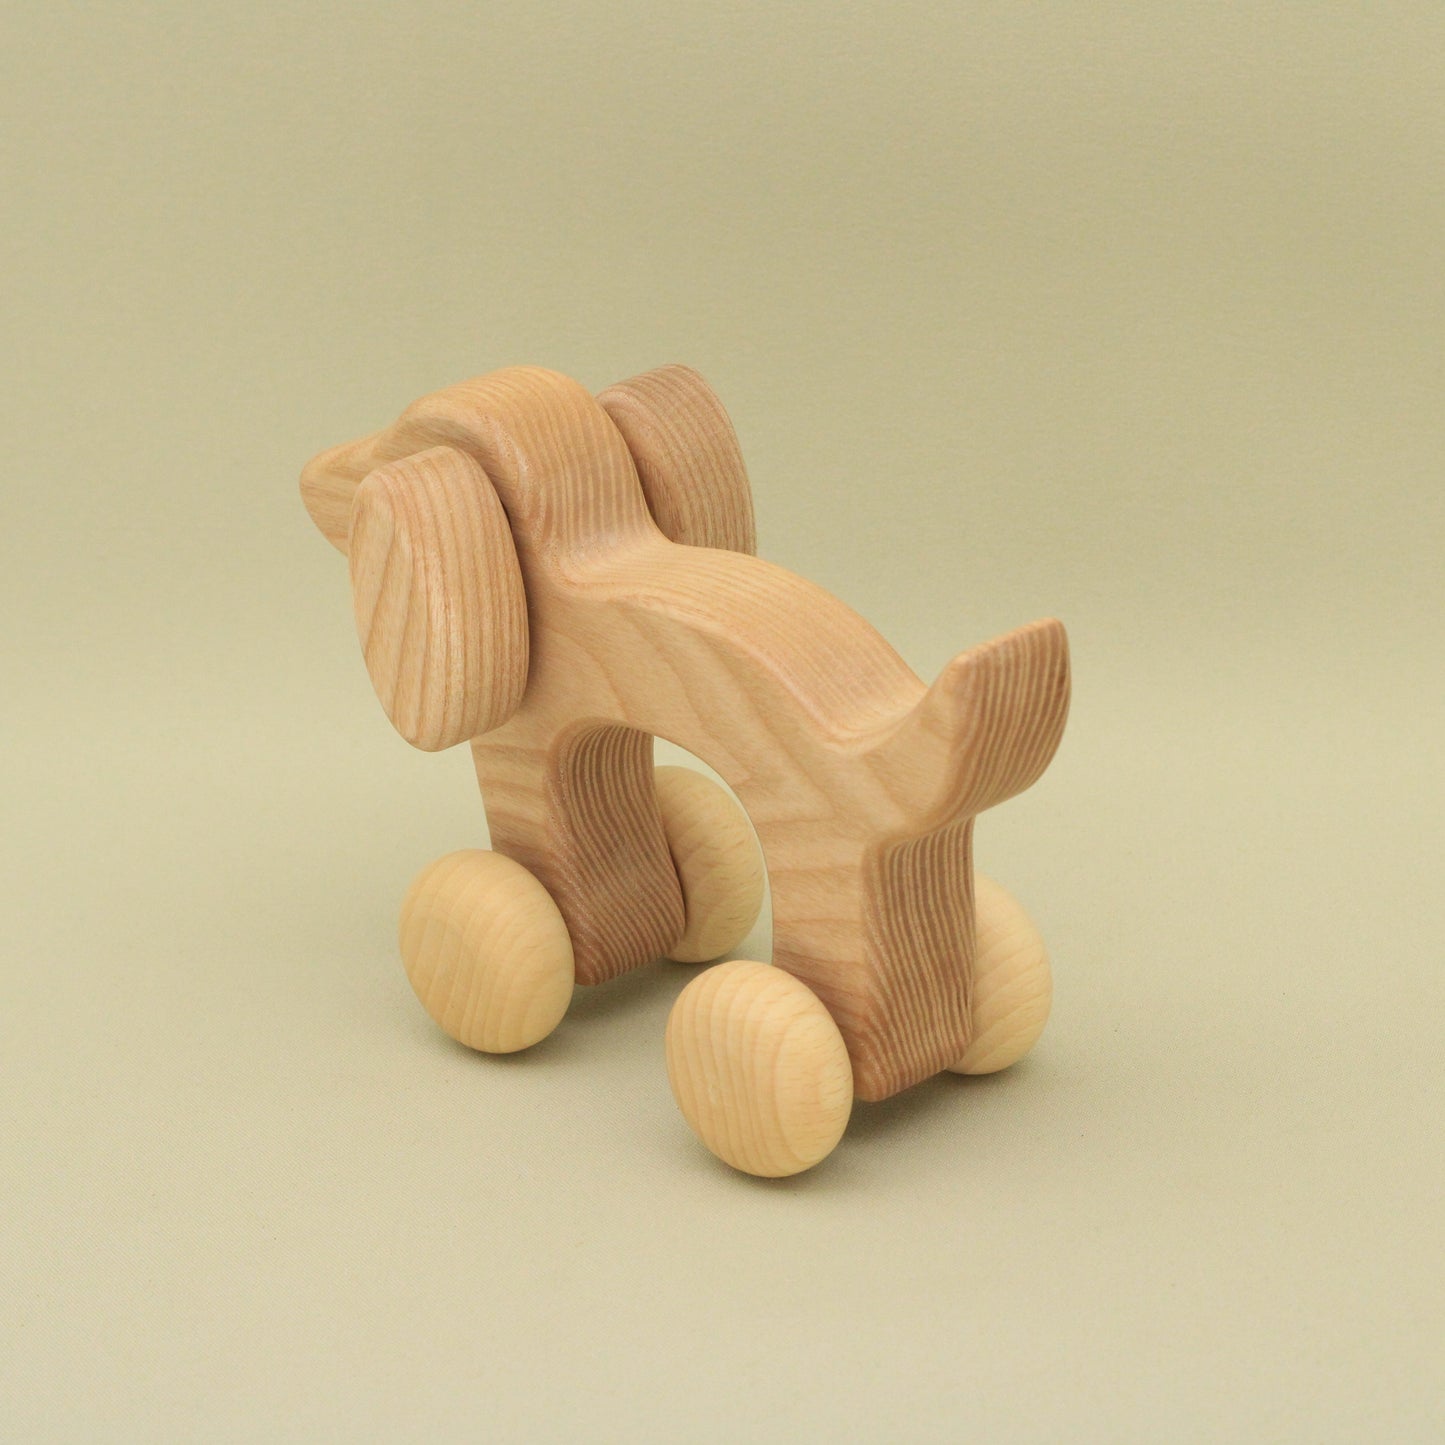 Lotes Toys Wooden Dog WA06